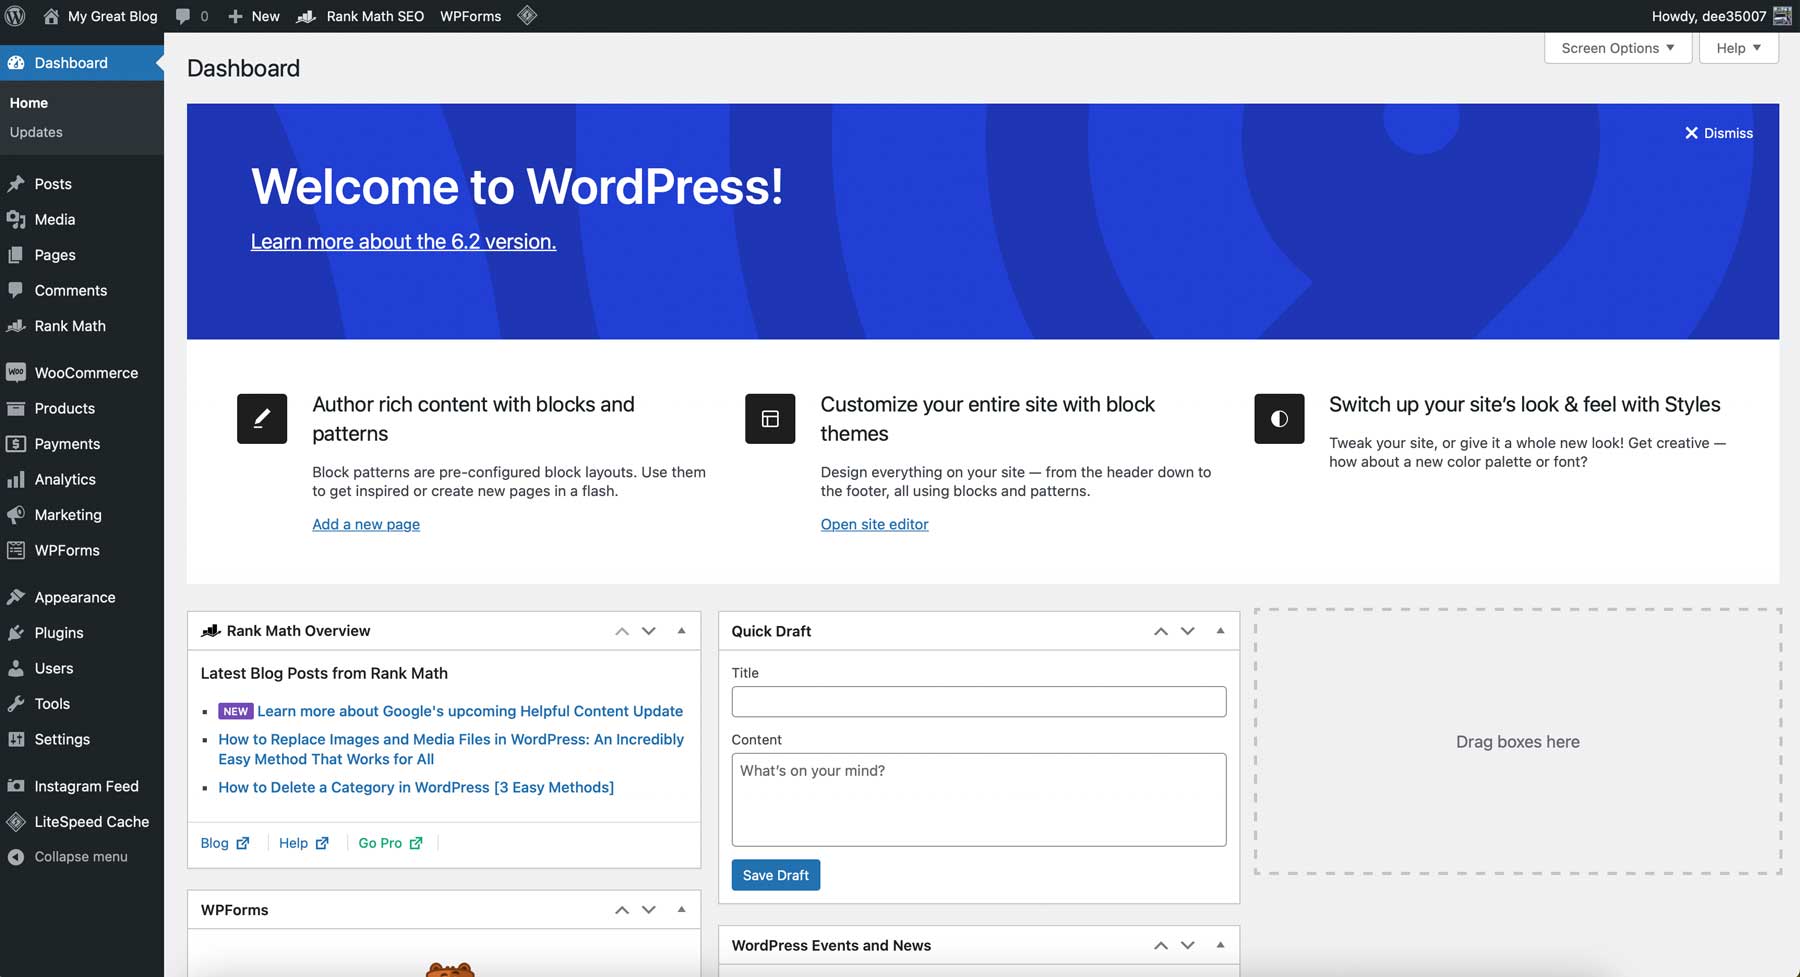 WordPress vs Dreamweaver dashboard